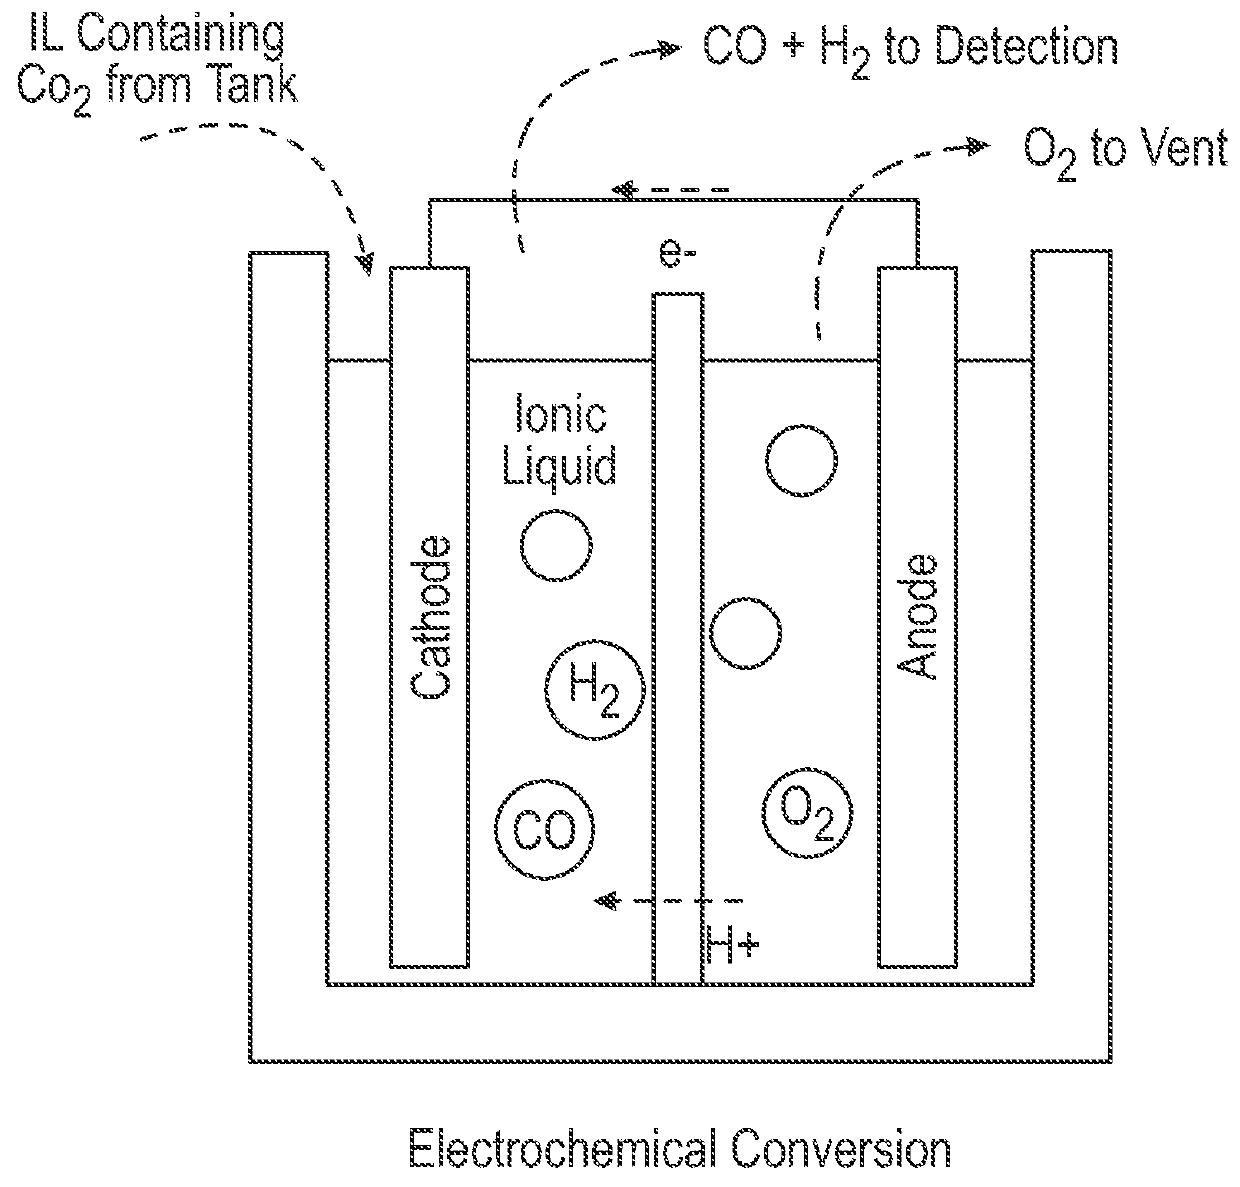 Electrochemical carbon dioxide converter and liquid regenerator